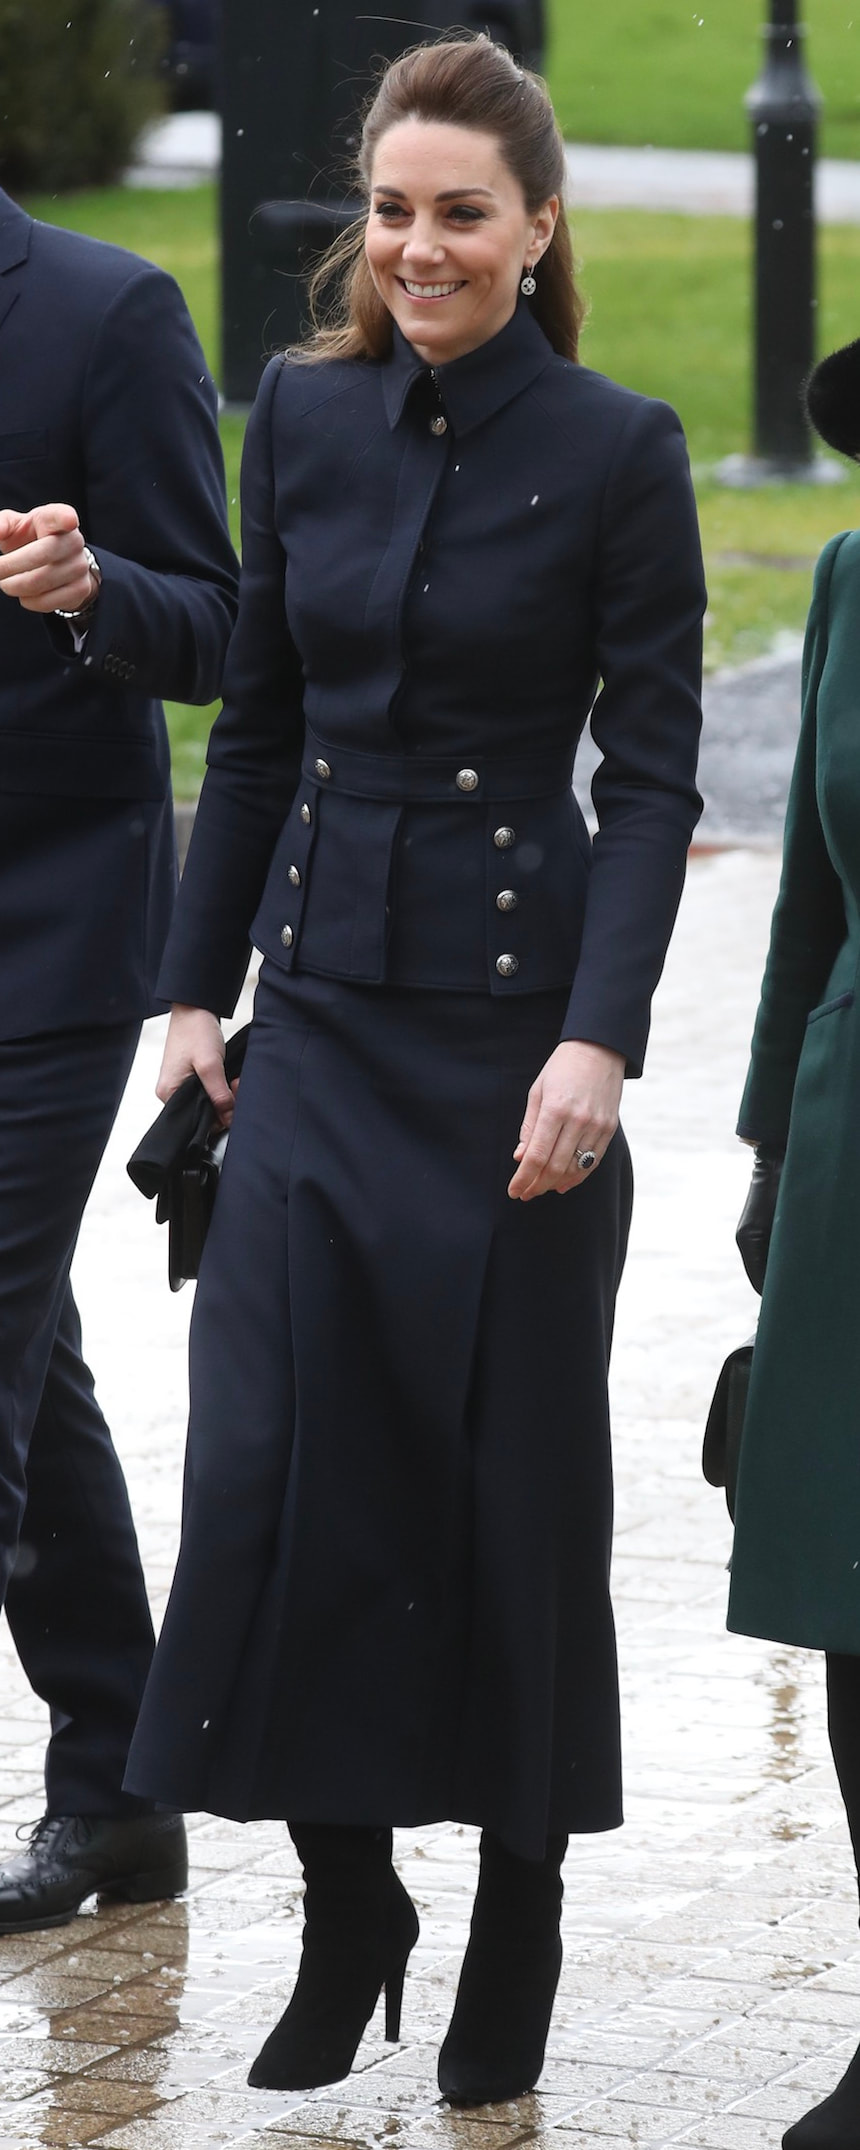 Alexander McQueen Navy Military Peplem Jacket as seen on Kate Middleton, The Duchess of Cambridge.